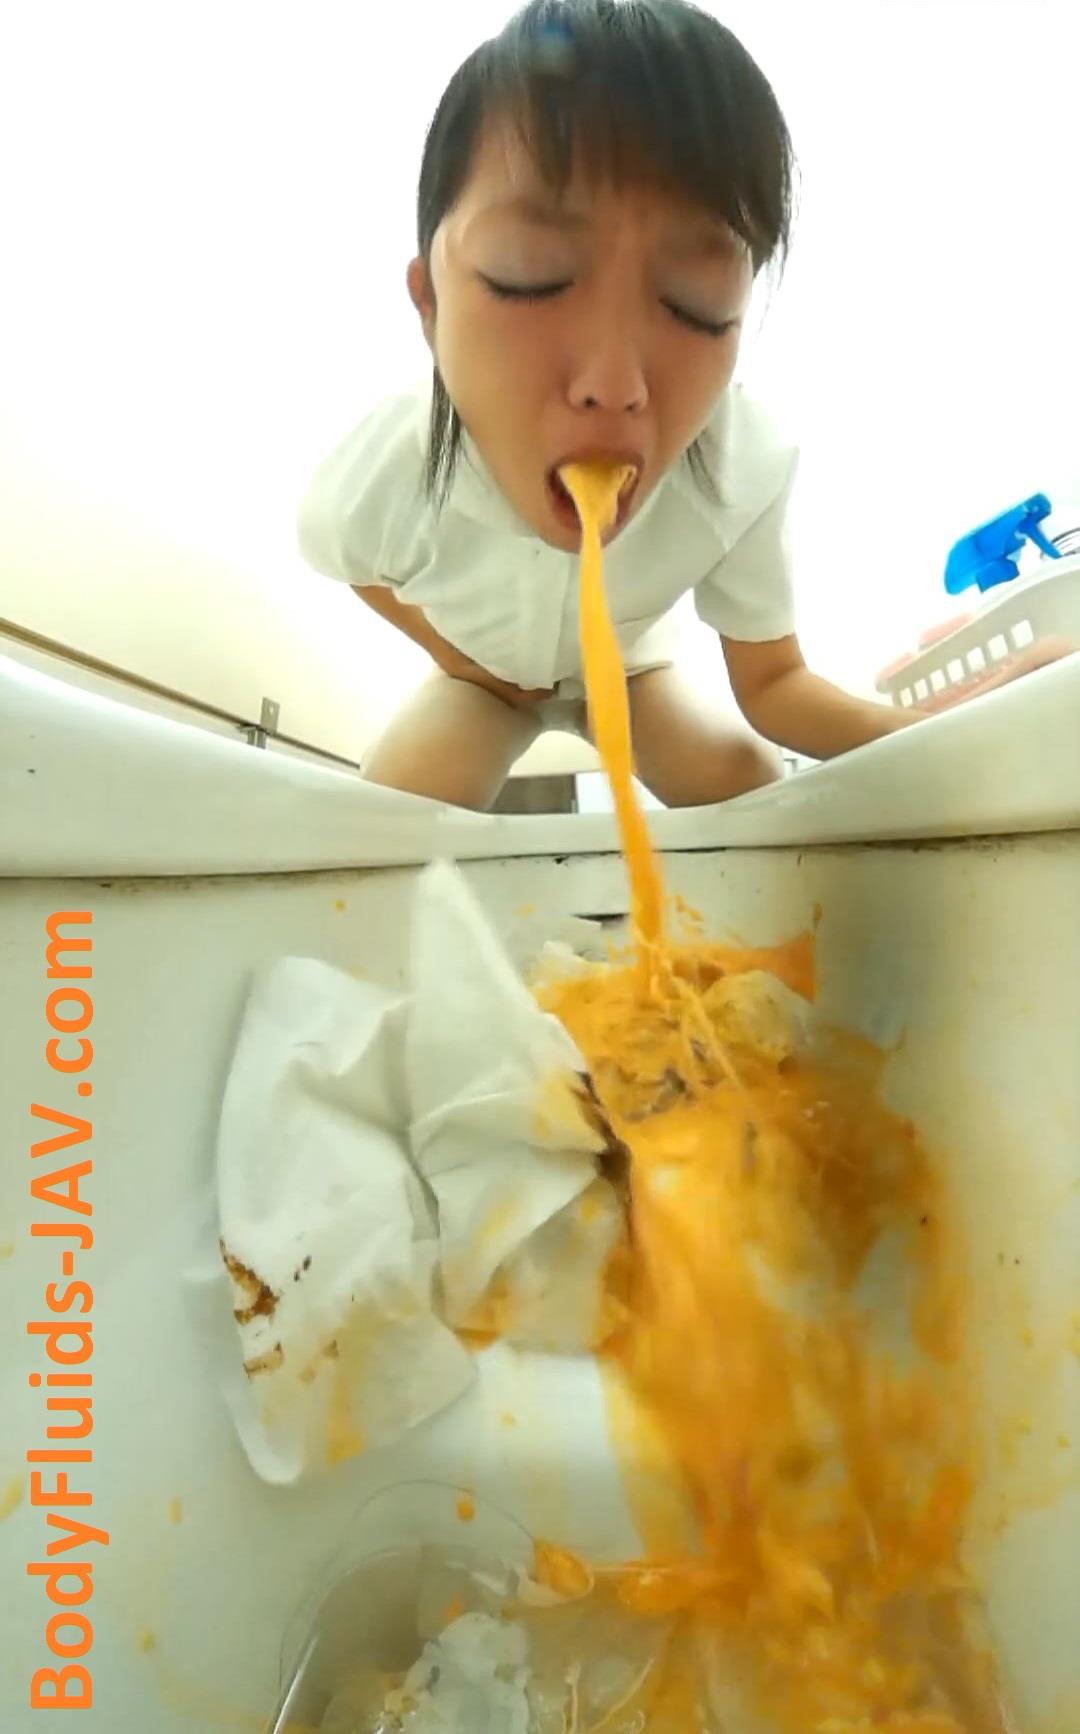 BFJV-11 Girl puke in toilet after food poisoning. (HD 1080p)